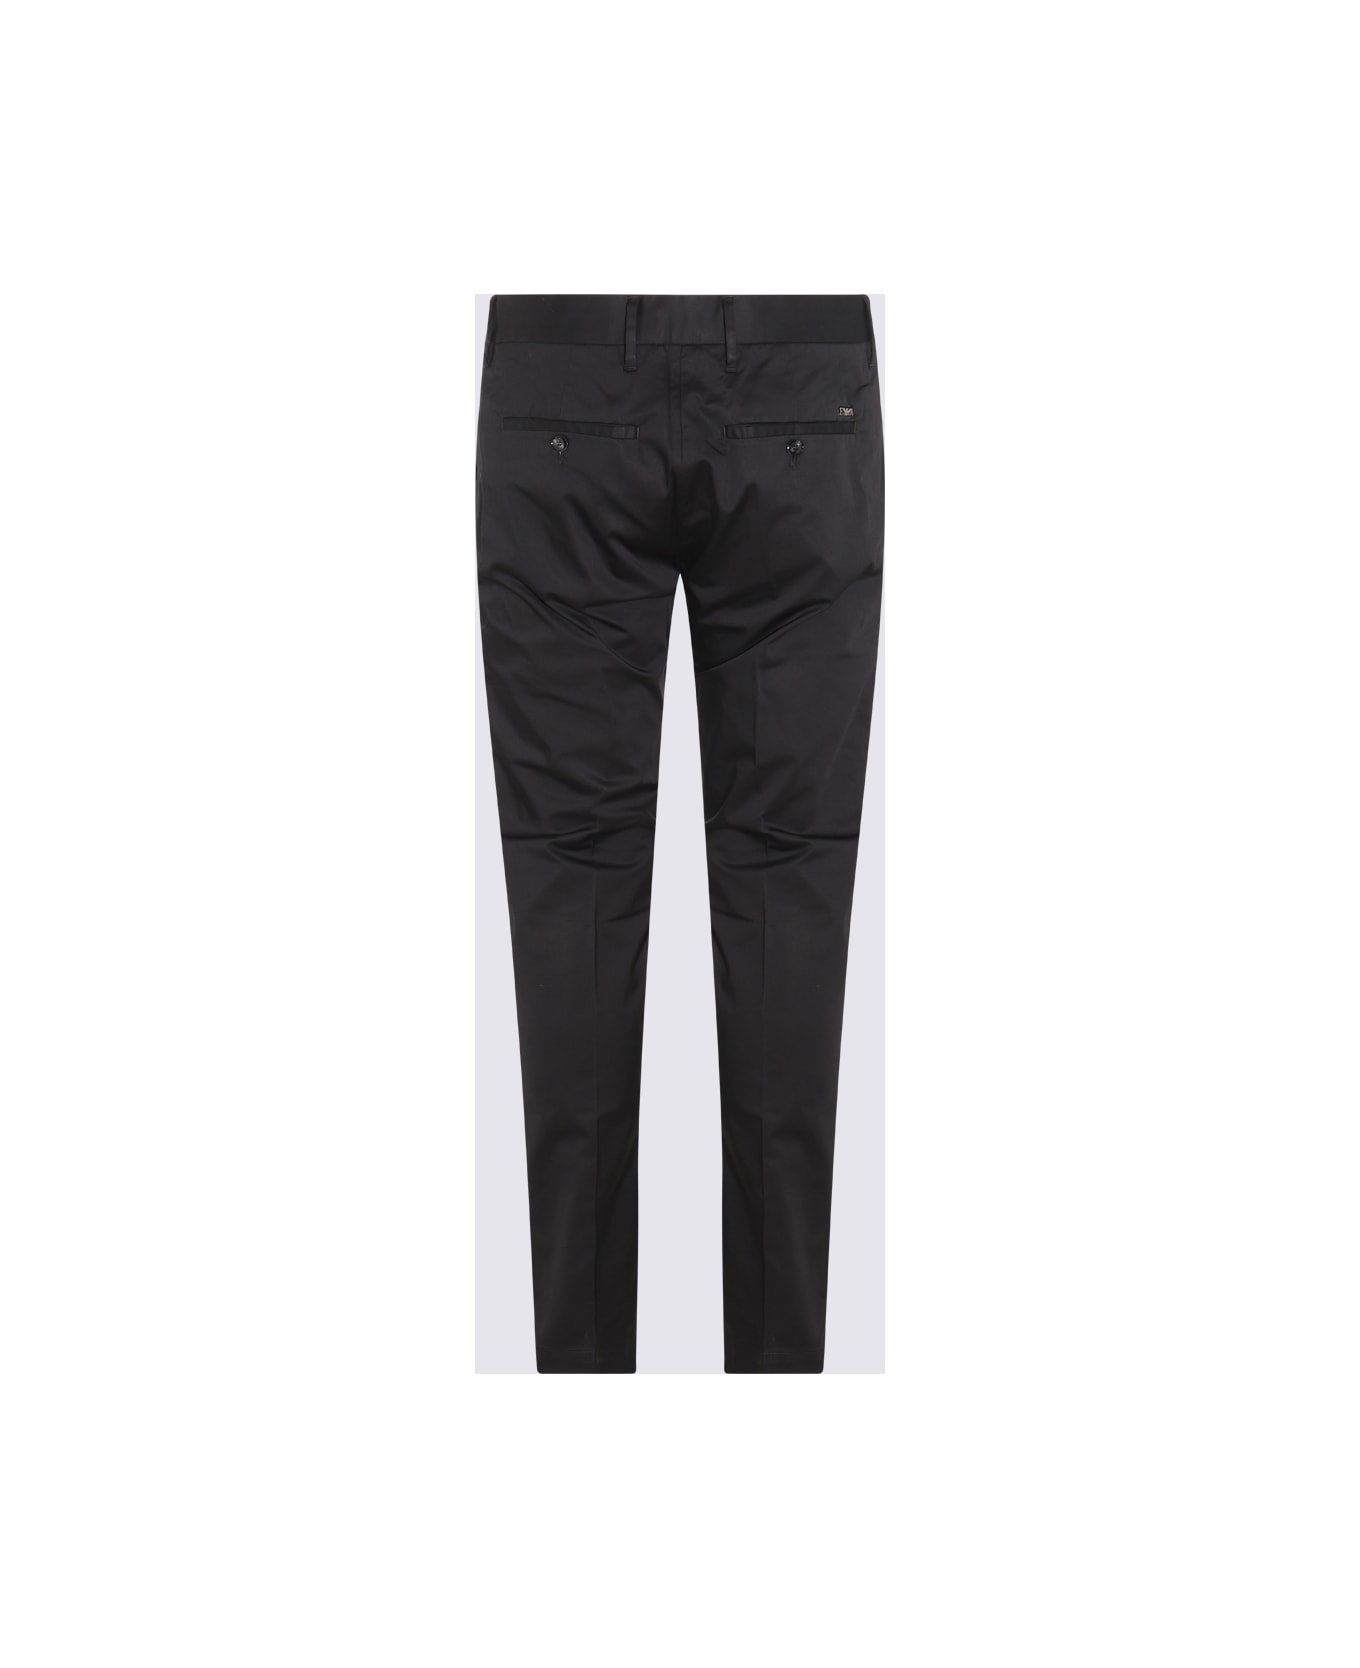 Emporio Armani Black Cotton Blend Pants - Black